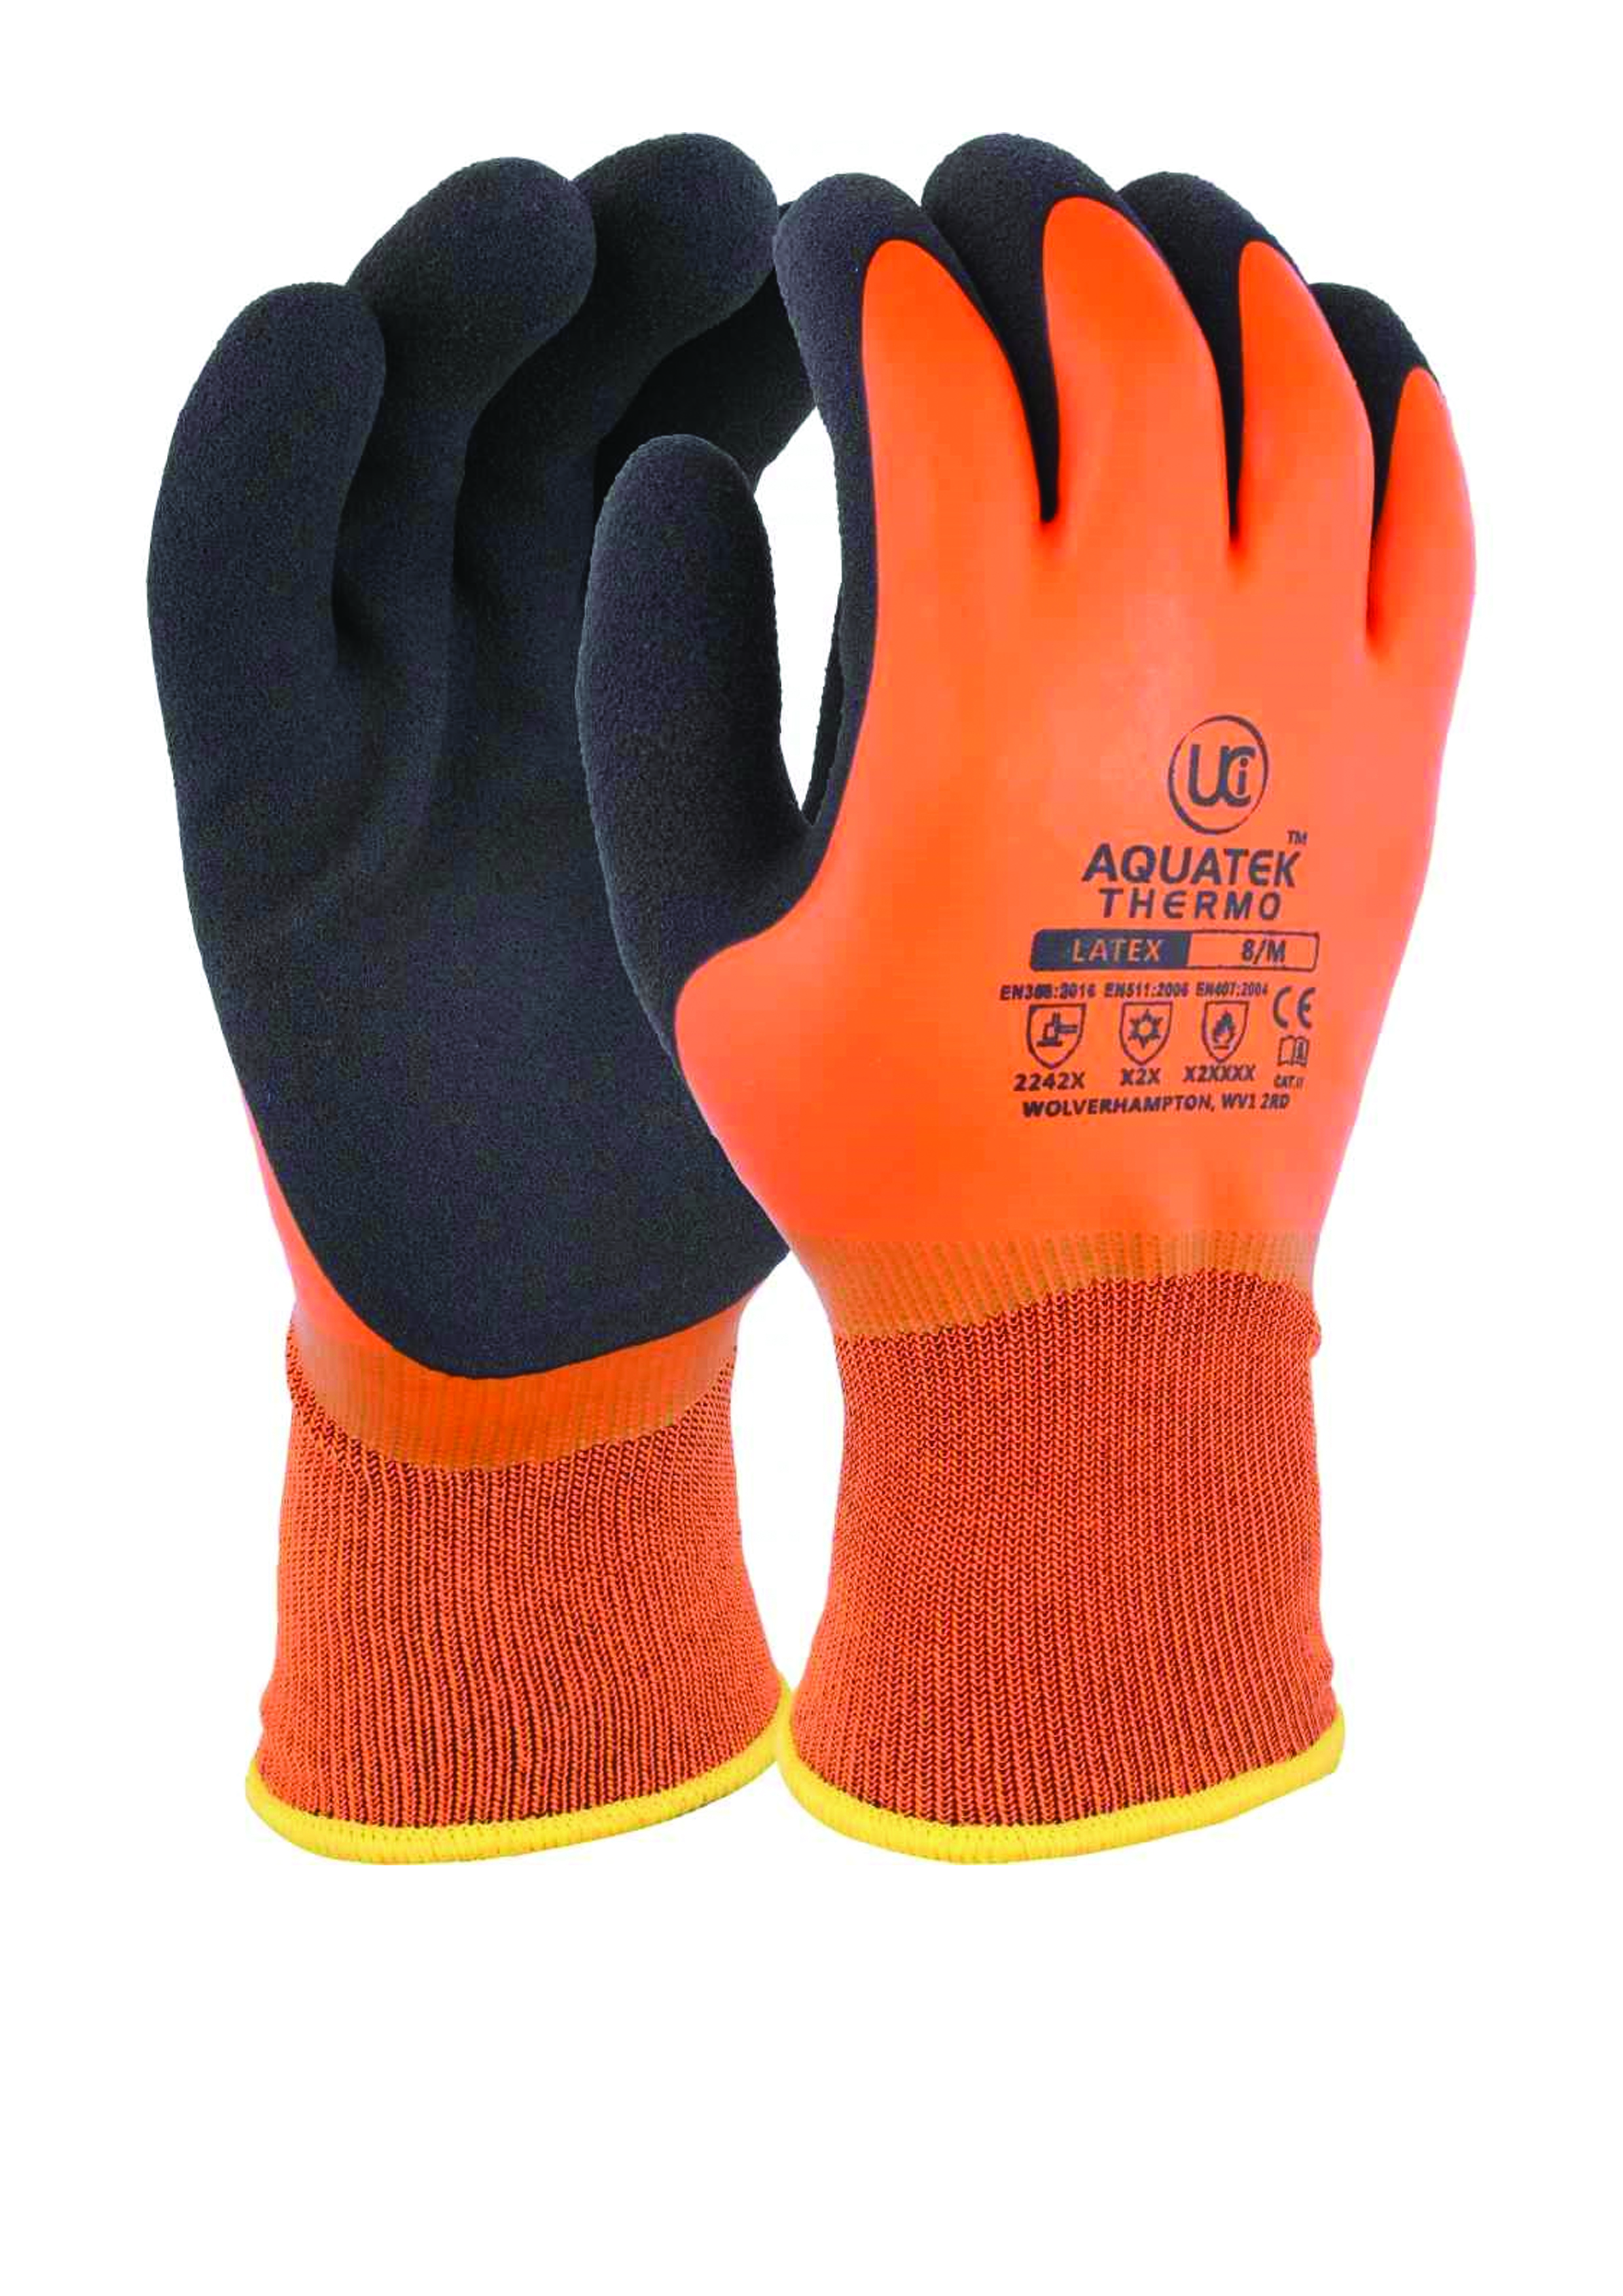 Aquatek Thermo Orange Glove Large (9)